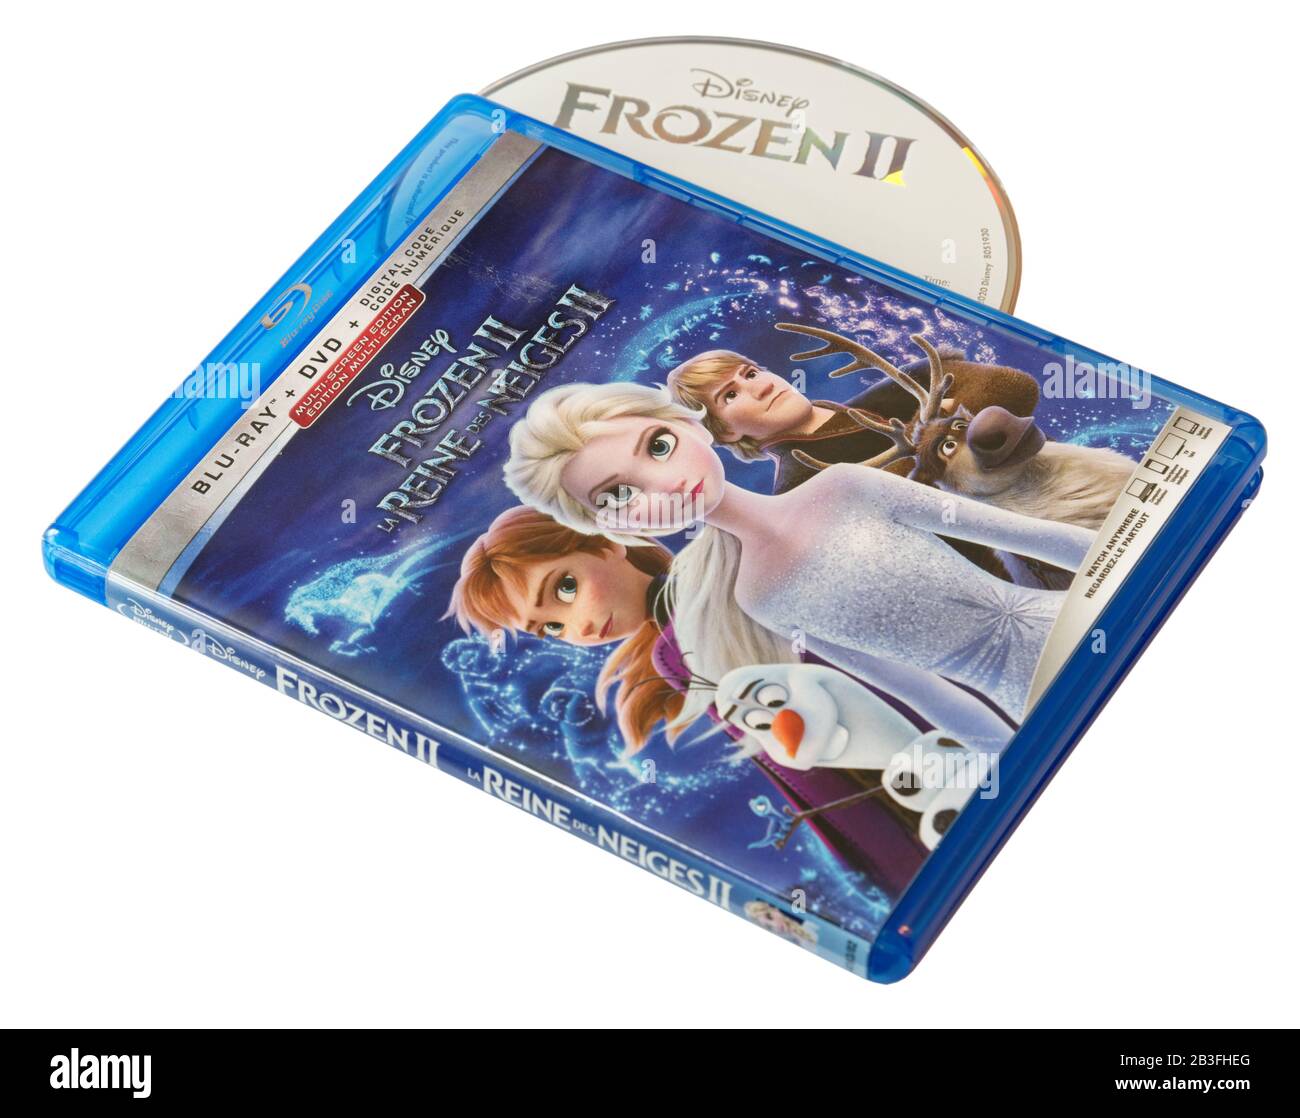 Frozen (La reine des neiges) (Ultimate Collector Edition)  (4K+Blu-Ray+Digital Copy)